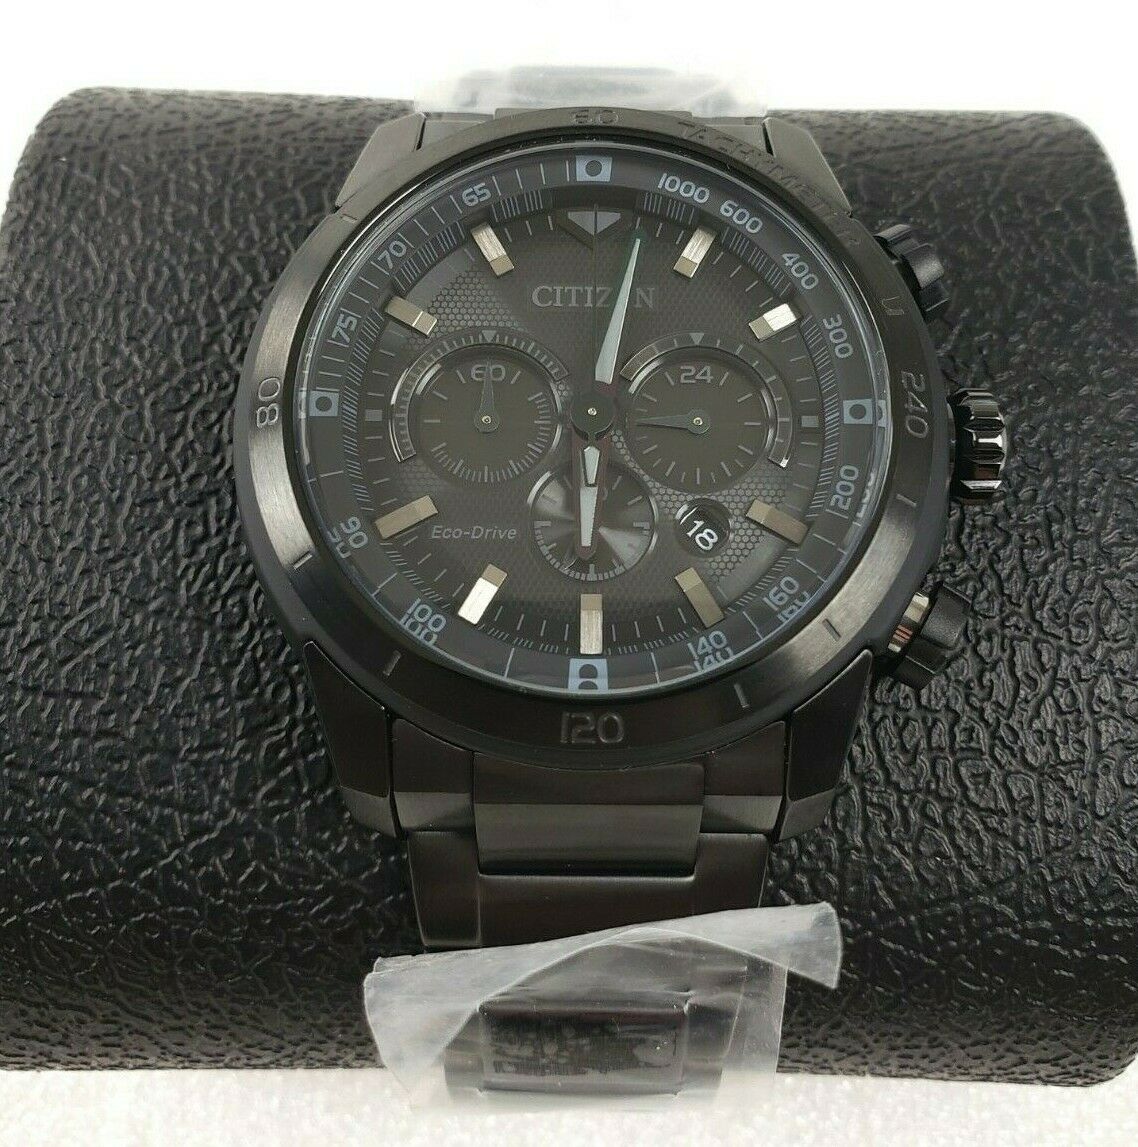 Citizen Men's CA4184-81E Ecosphere Chronograph Black Stainless Steel Watch - Black